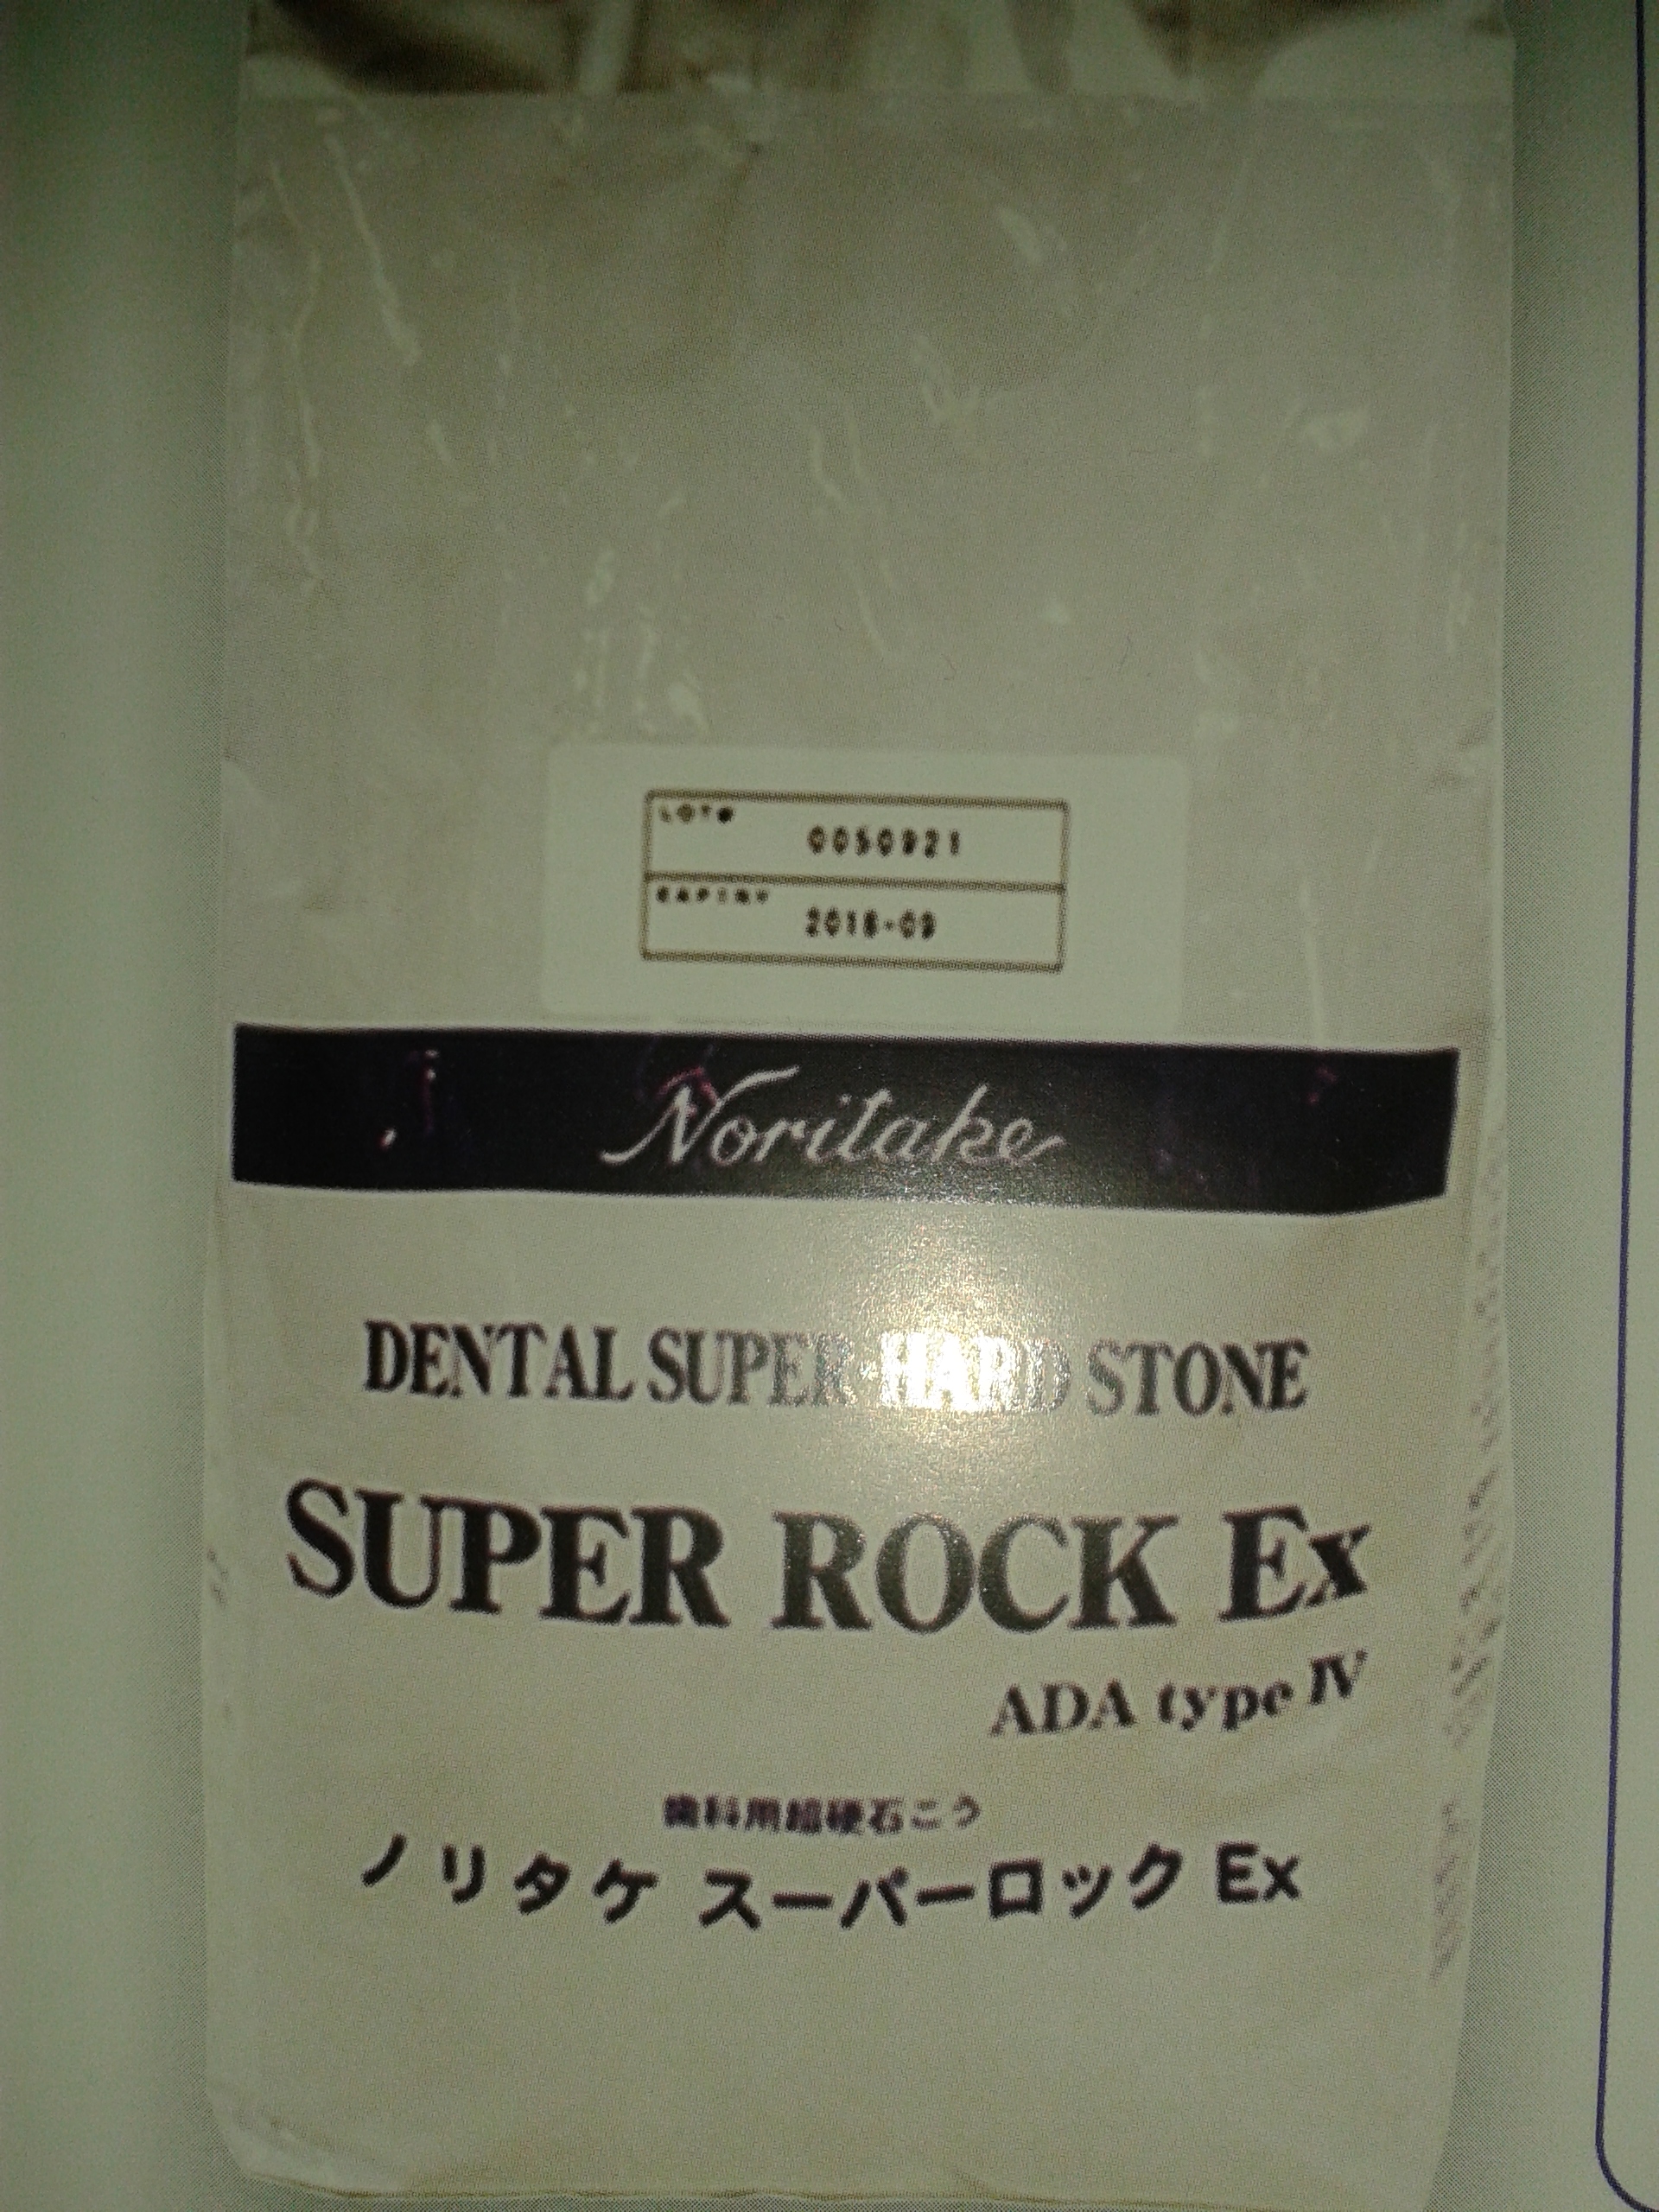 Super Rock EX тип IV - гипс 4 класса, 3кг